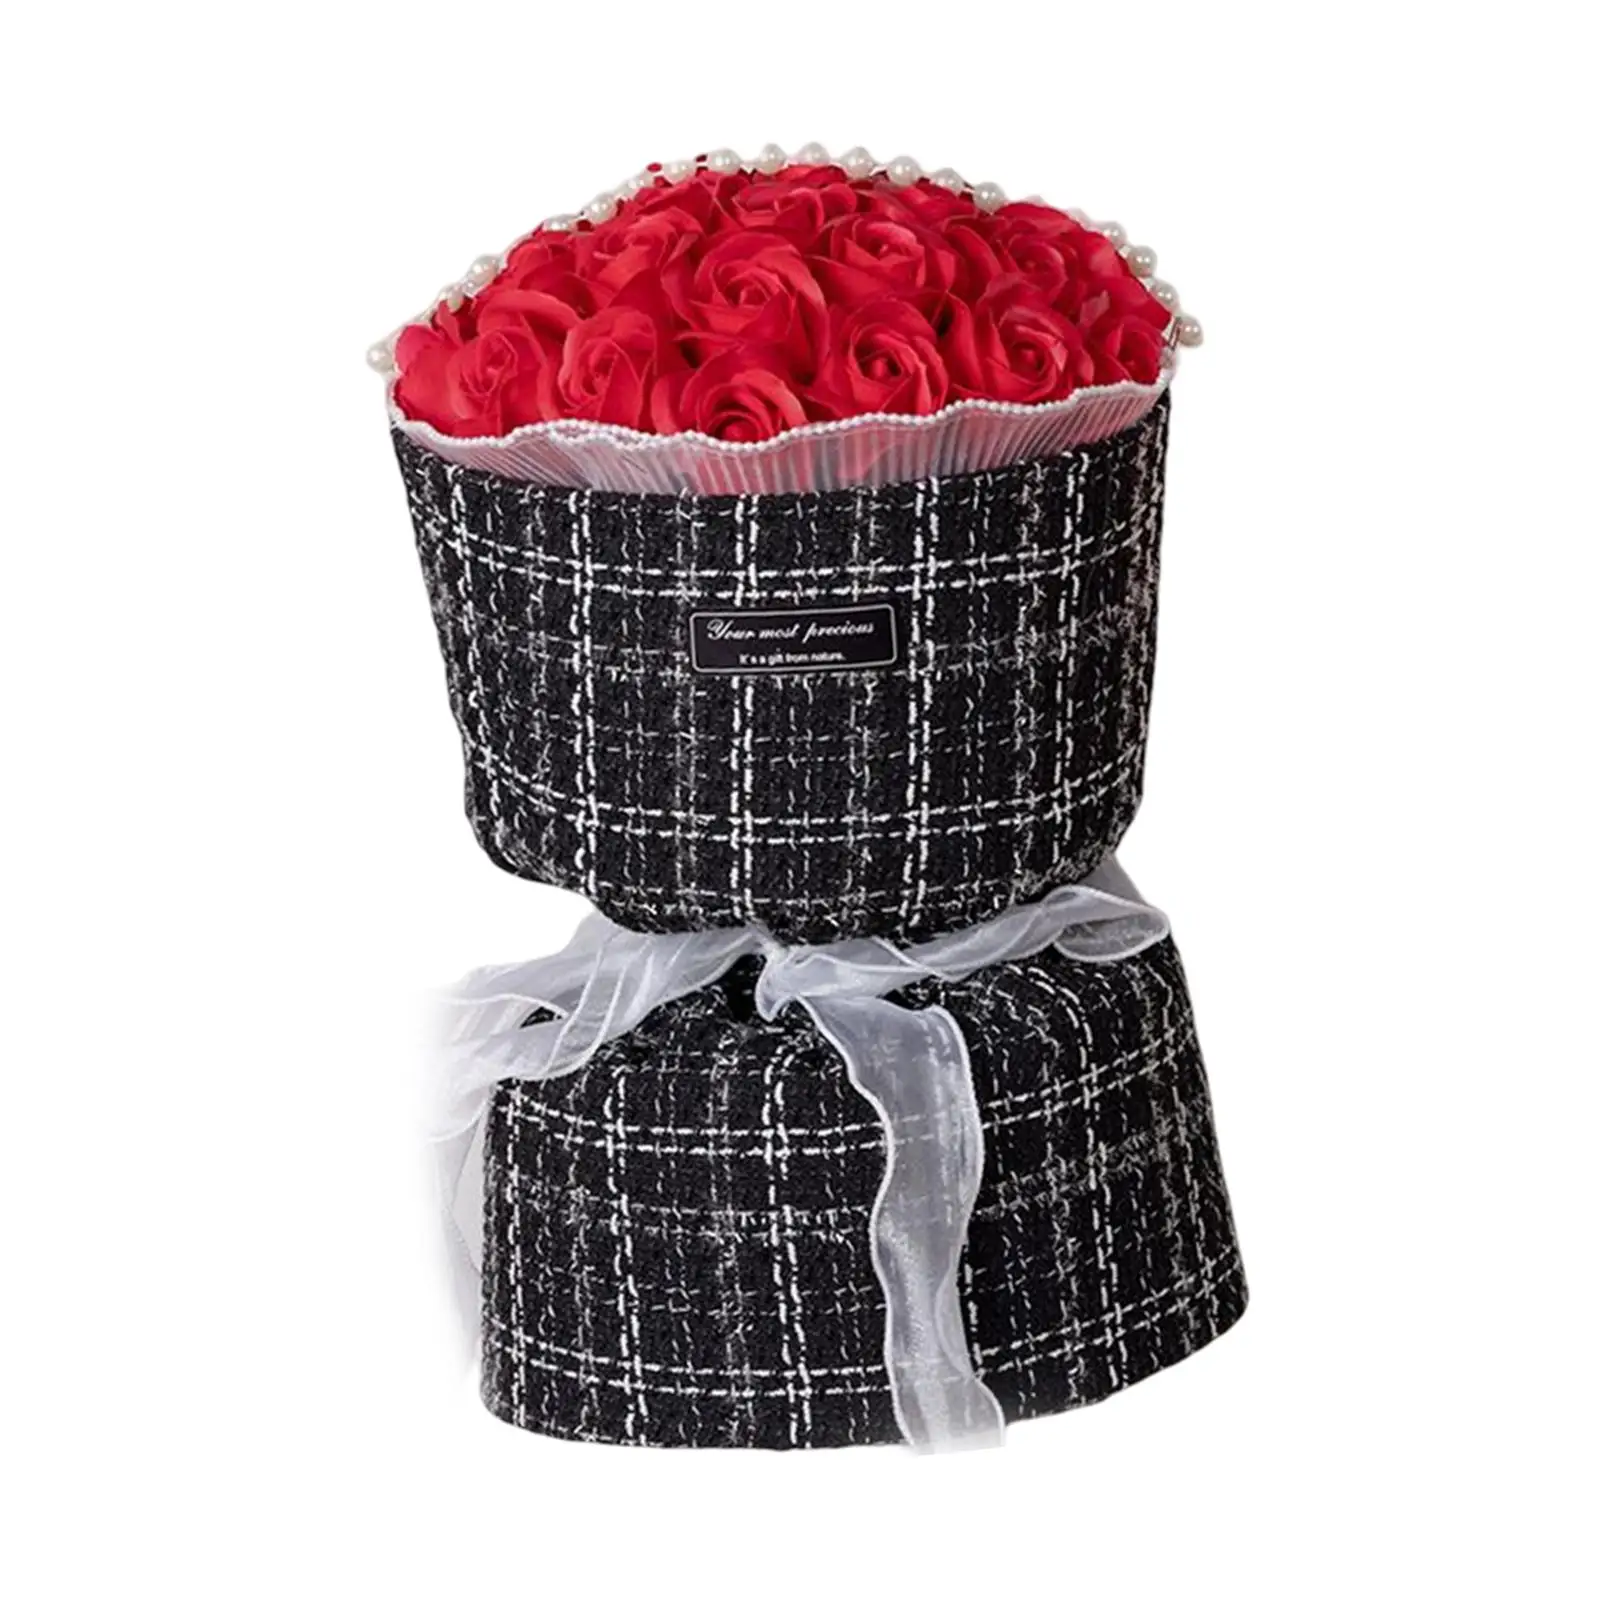 Romantic Artificial Flowers Rose Bouquet Valentine`S Day Decor Size 24Cmx30cm Realistic Appearance